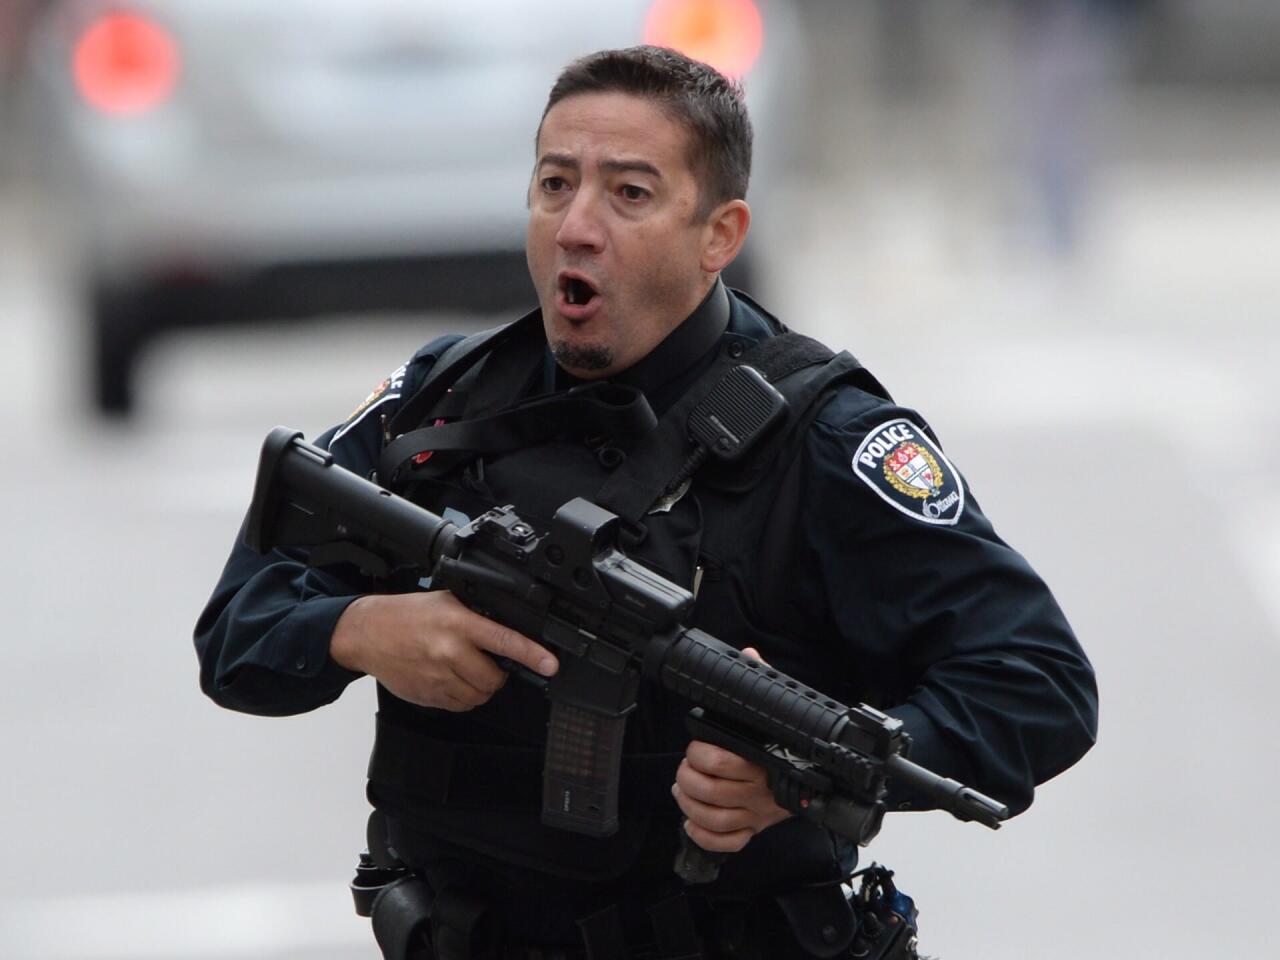 Shooting near Canadian parliament